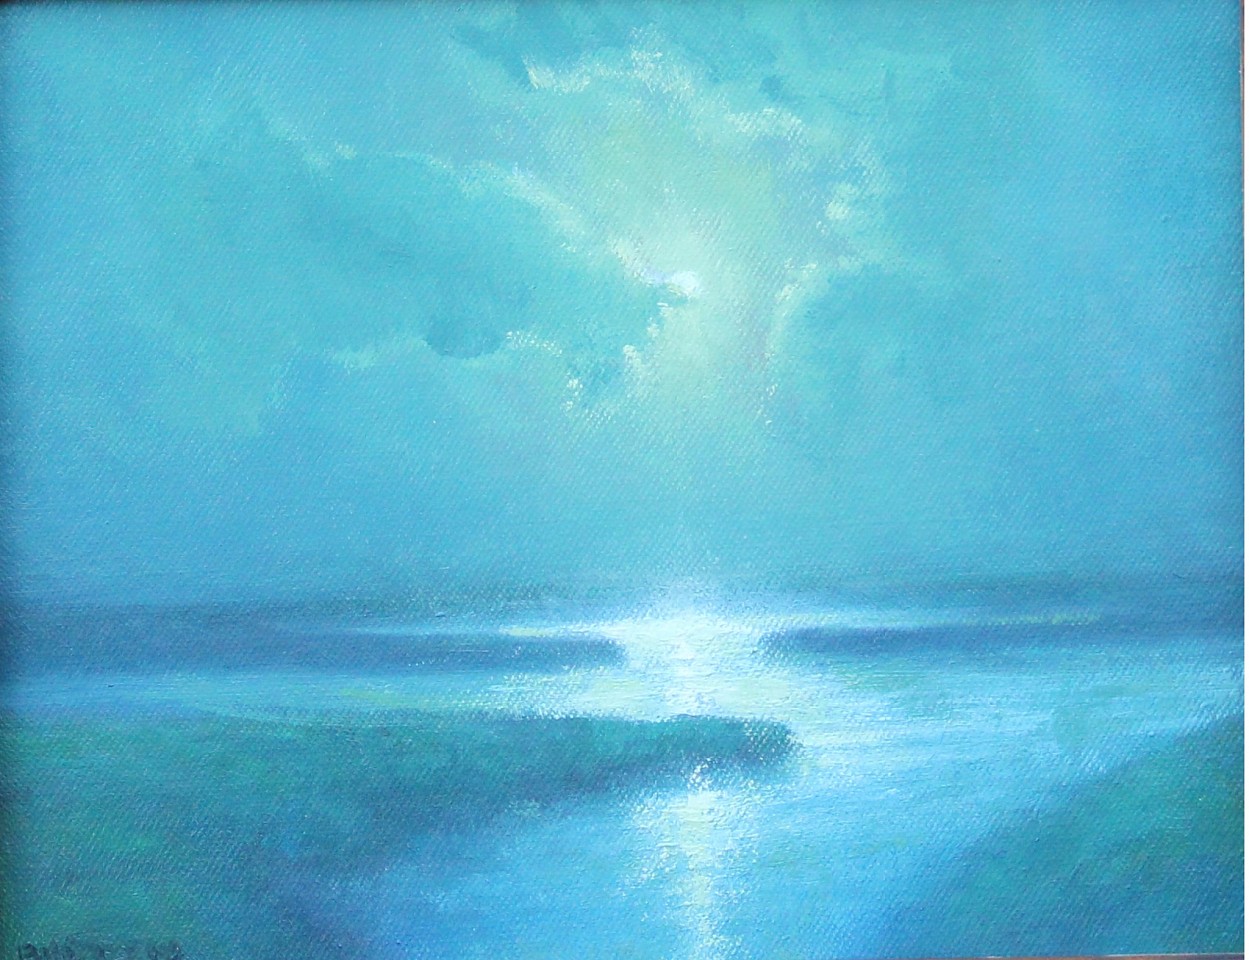 Michael Budden, Moonlight Marsh
oil on panel, 8"" x 10""
MBu 1118.01
$950